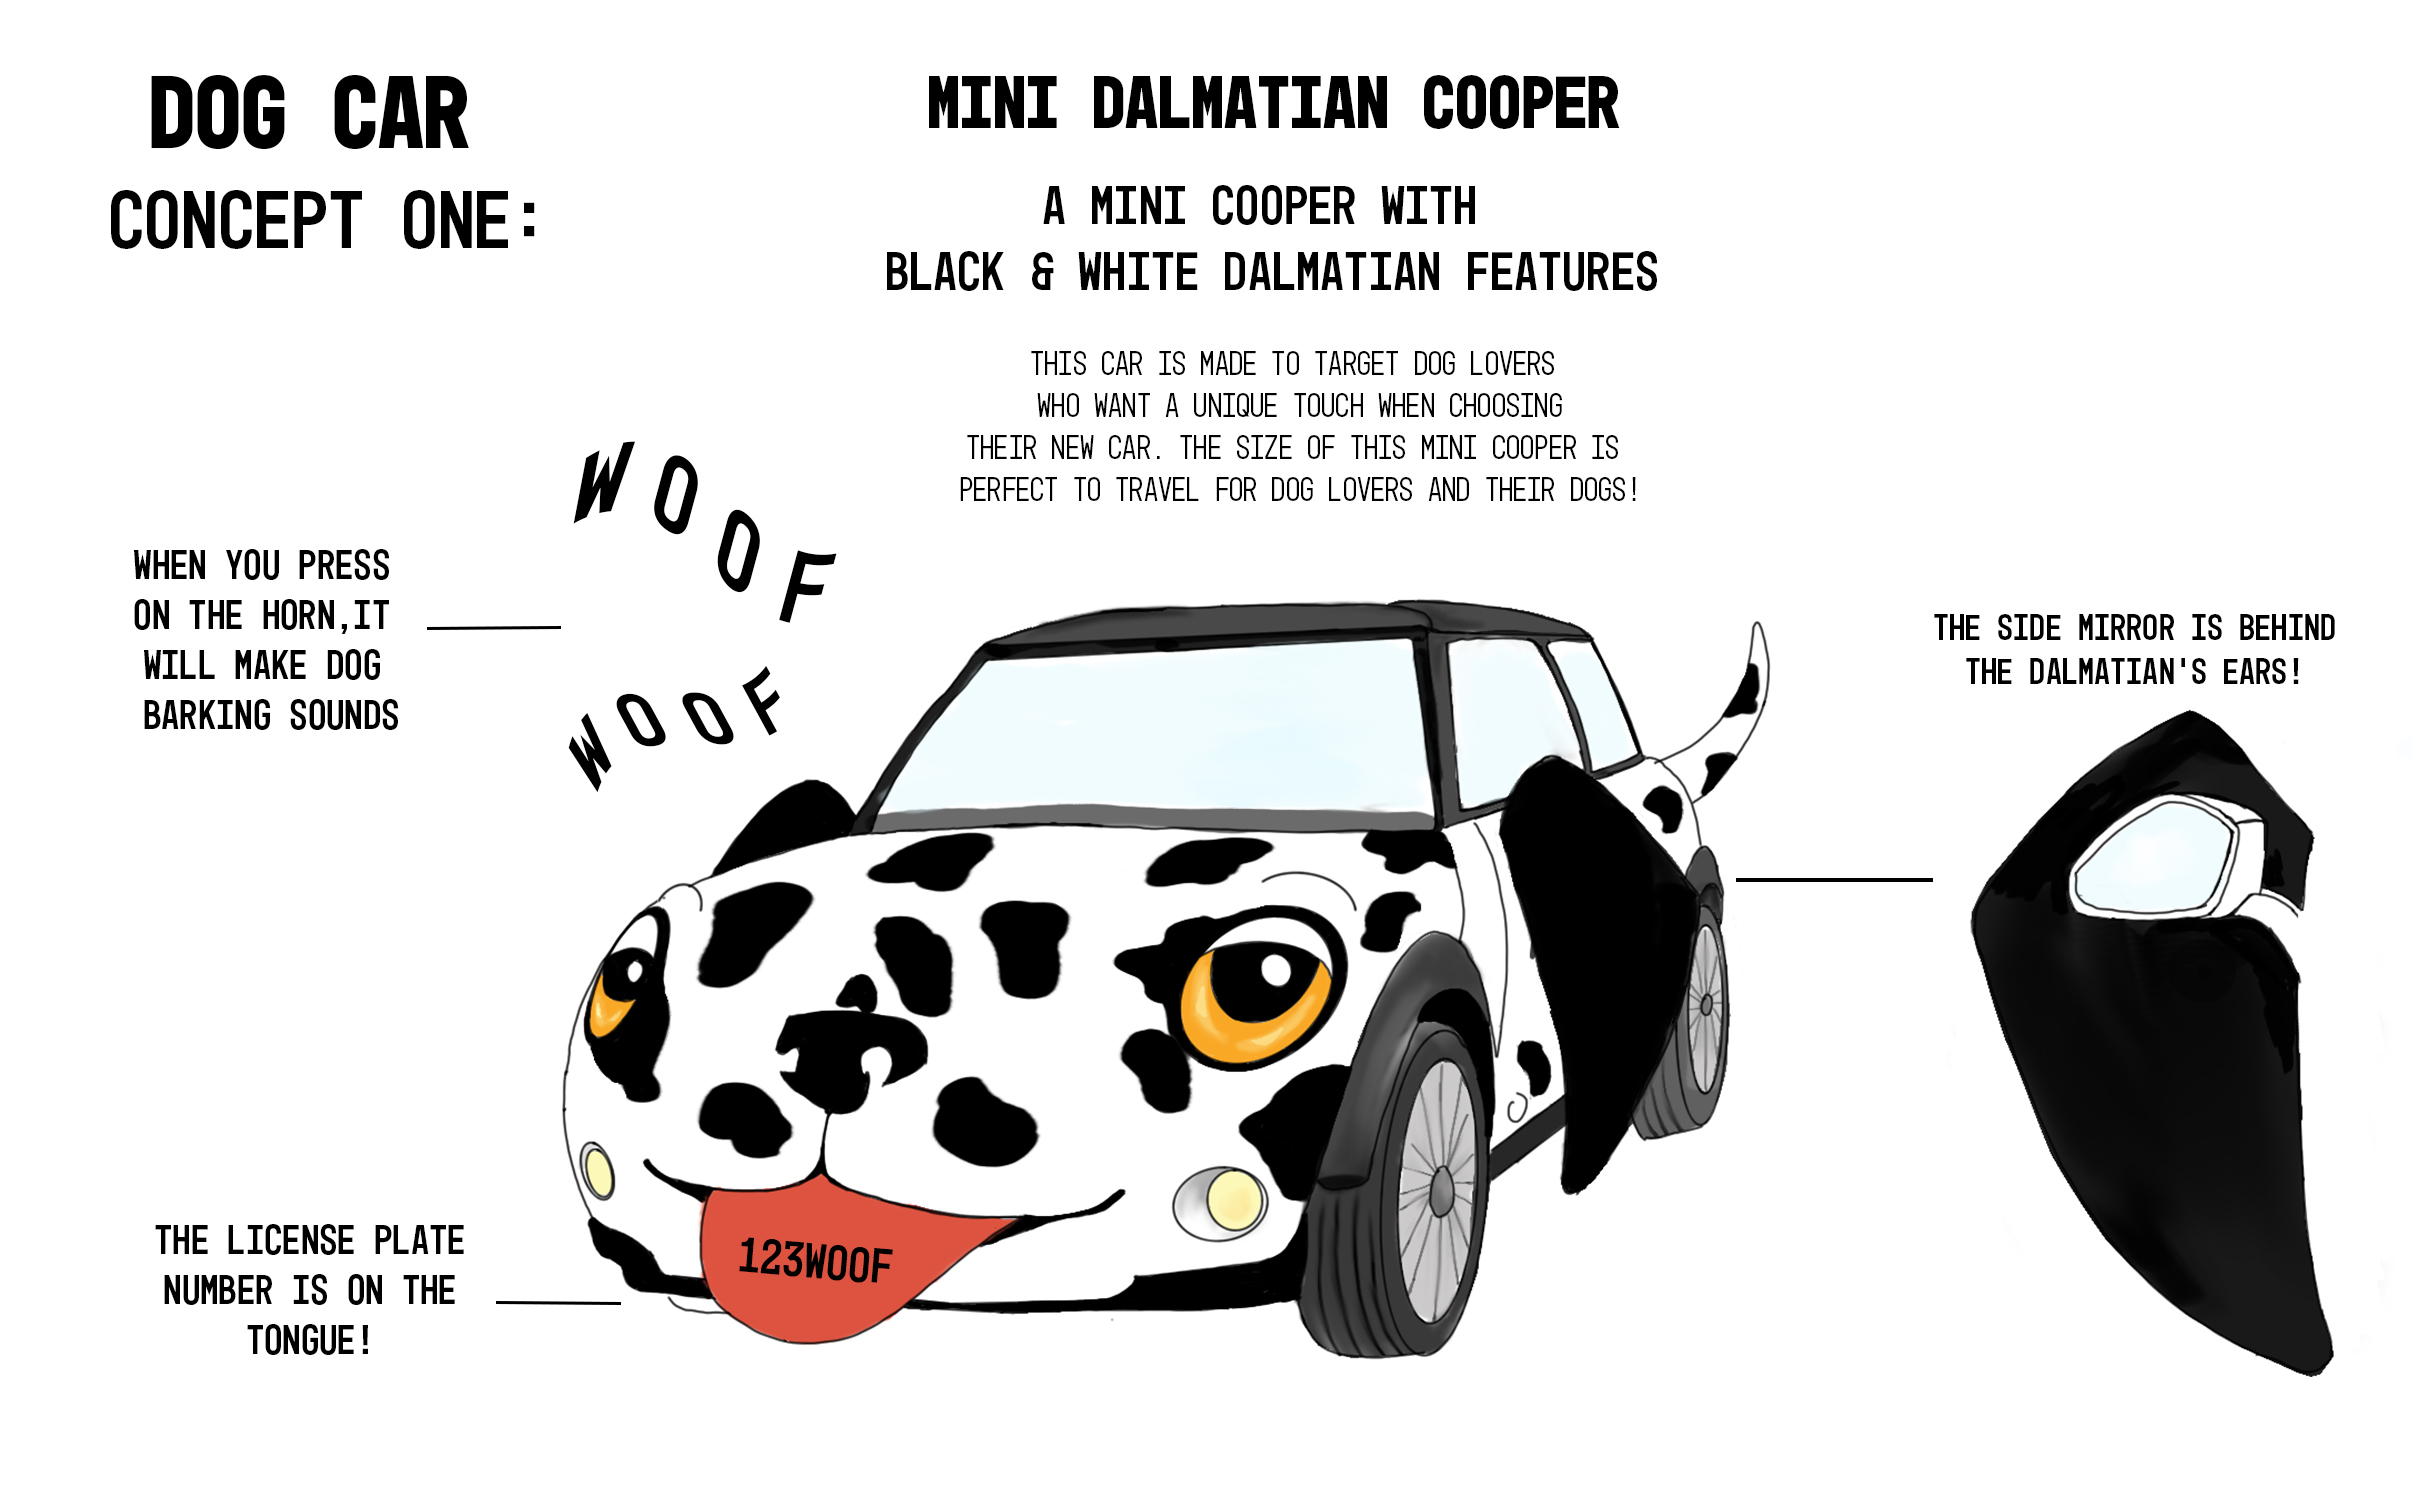 mini dalmatian cooper